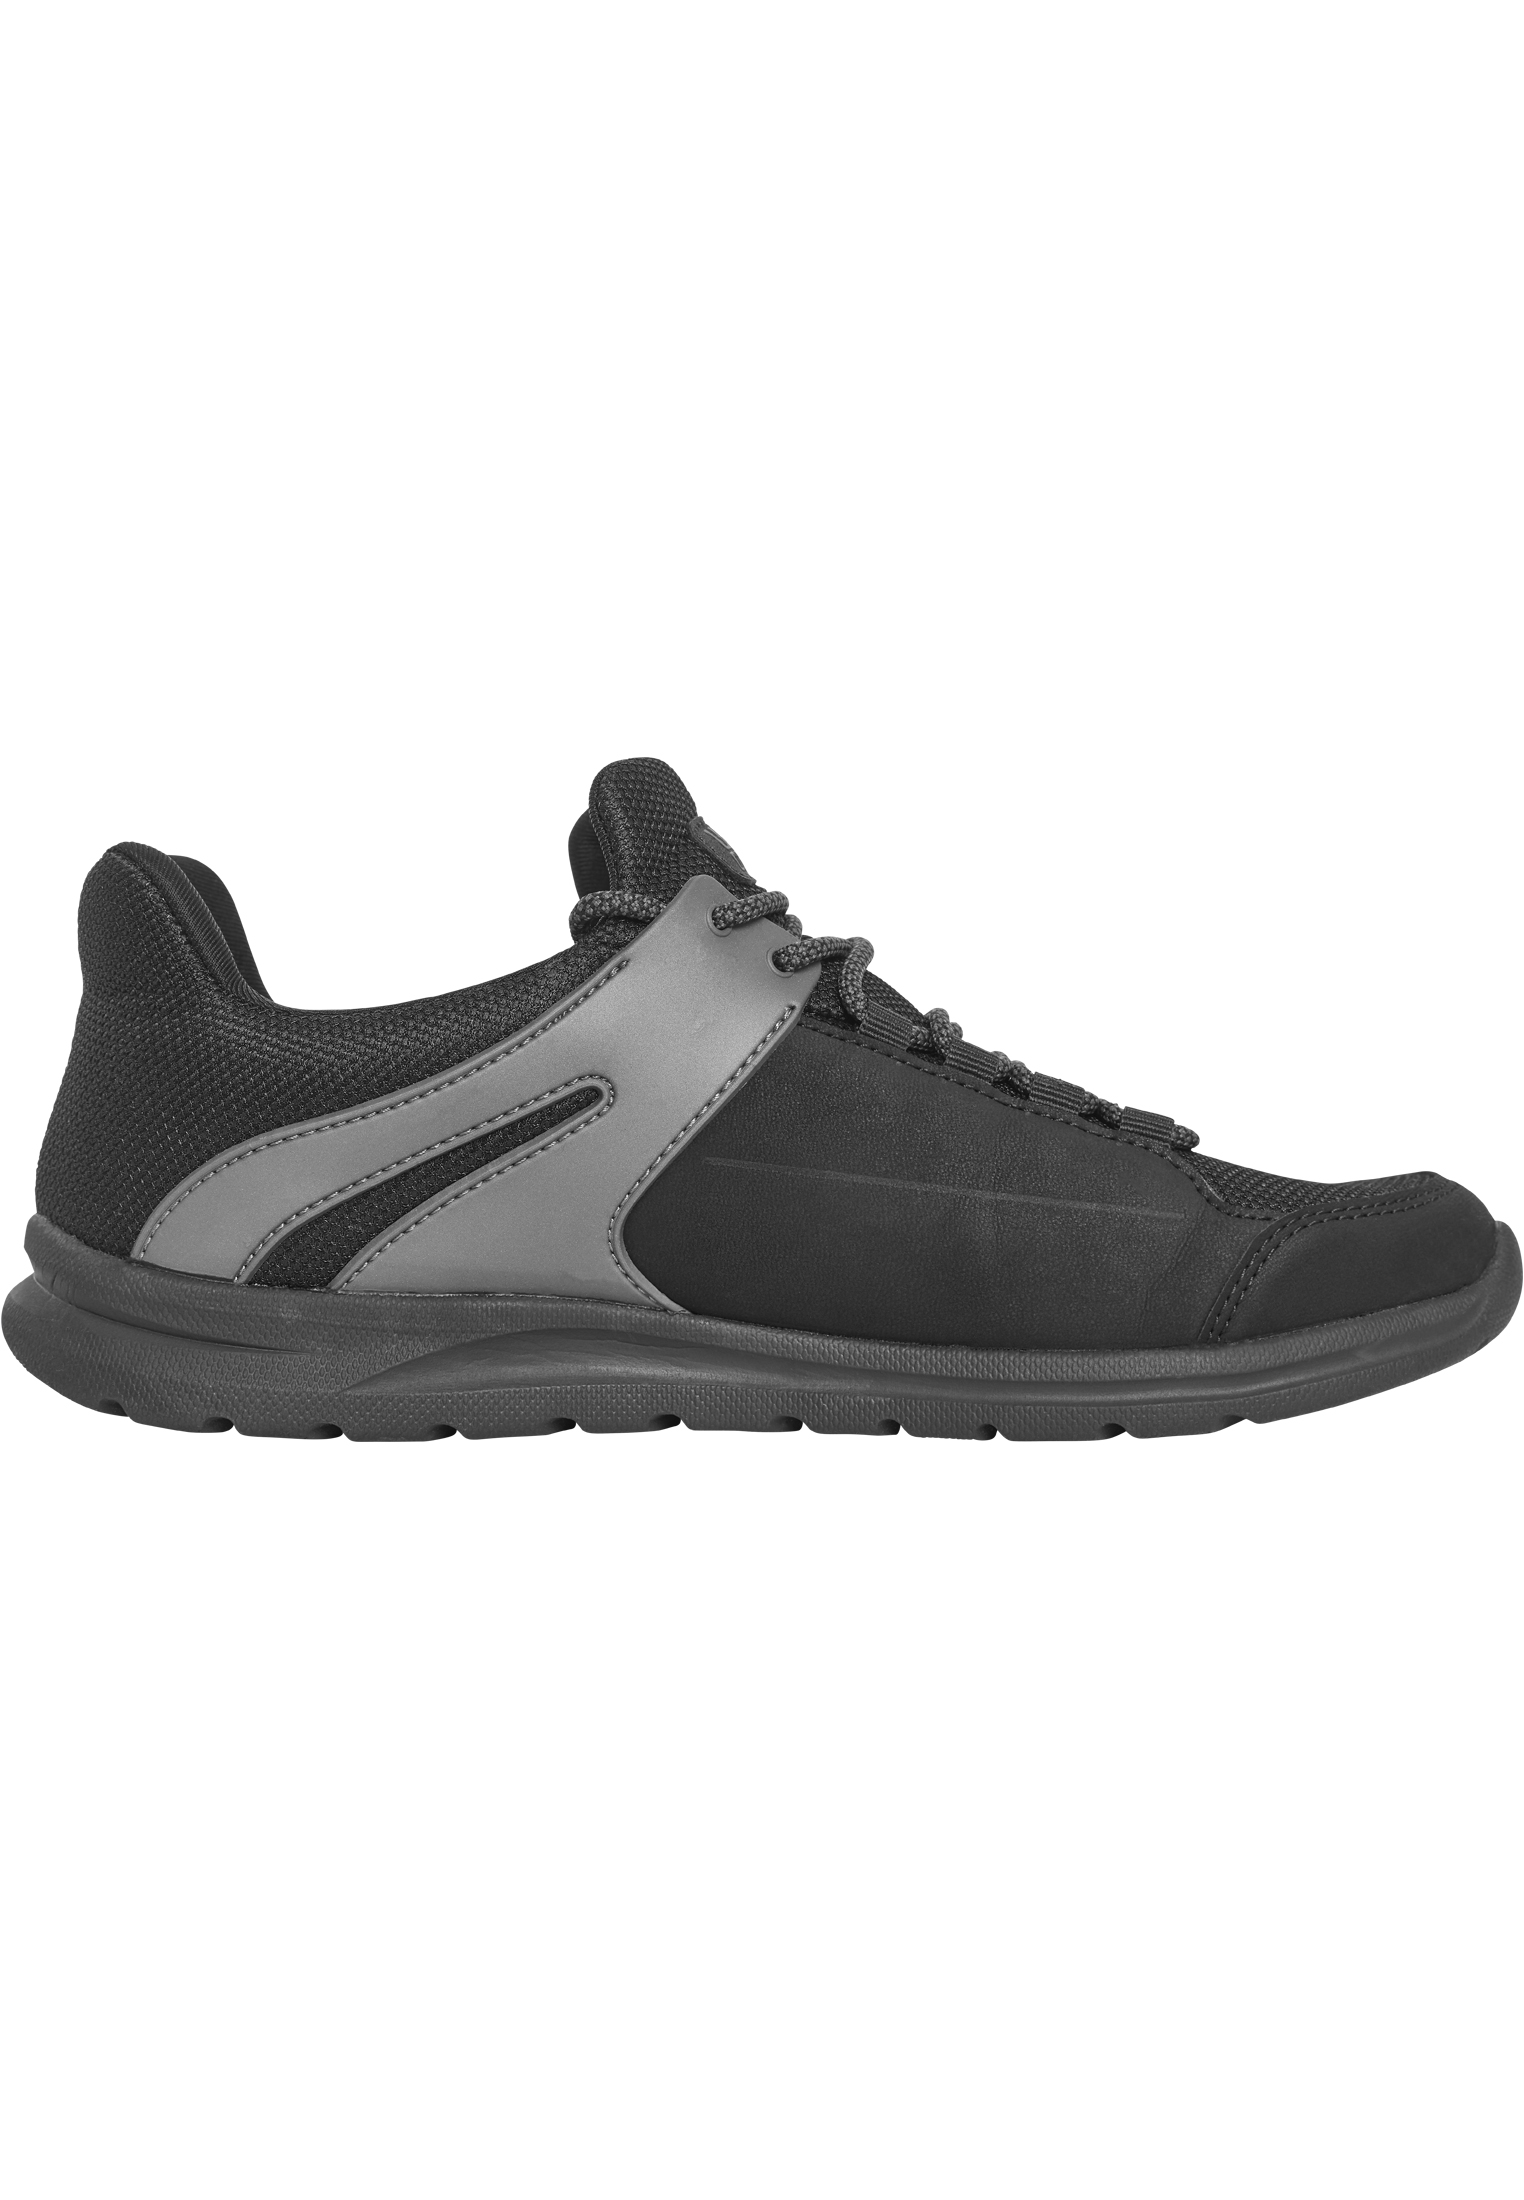 Schuhe Trend Sneaker in Farbe blk/blk/blk